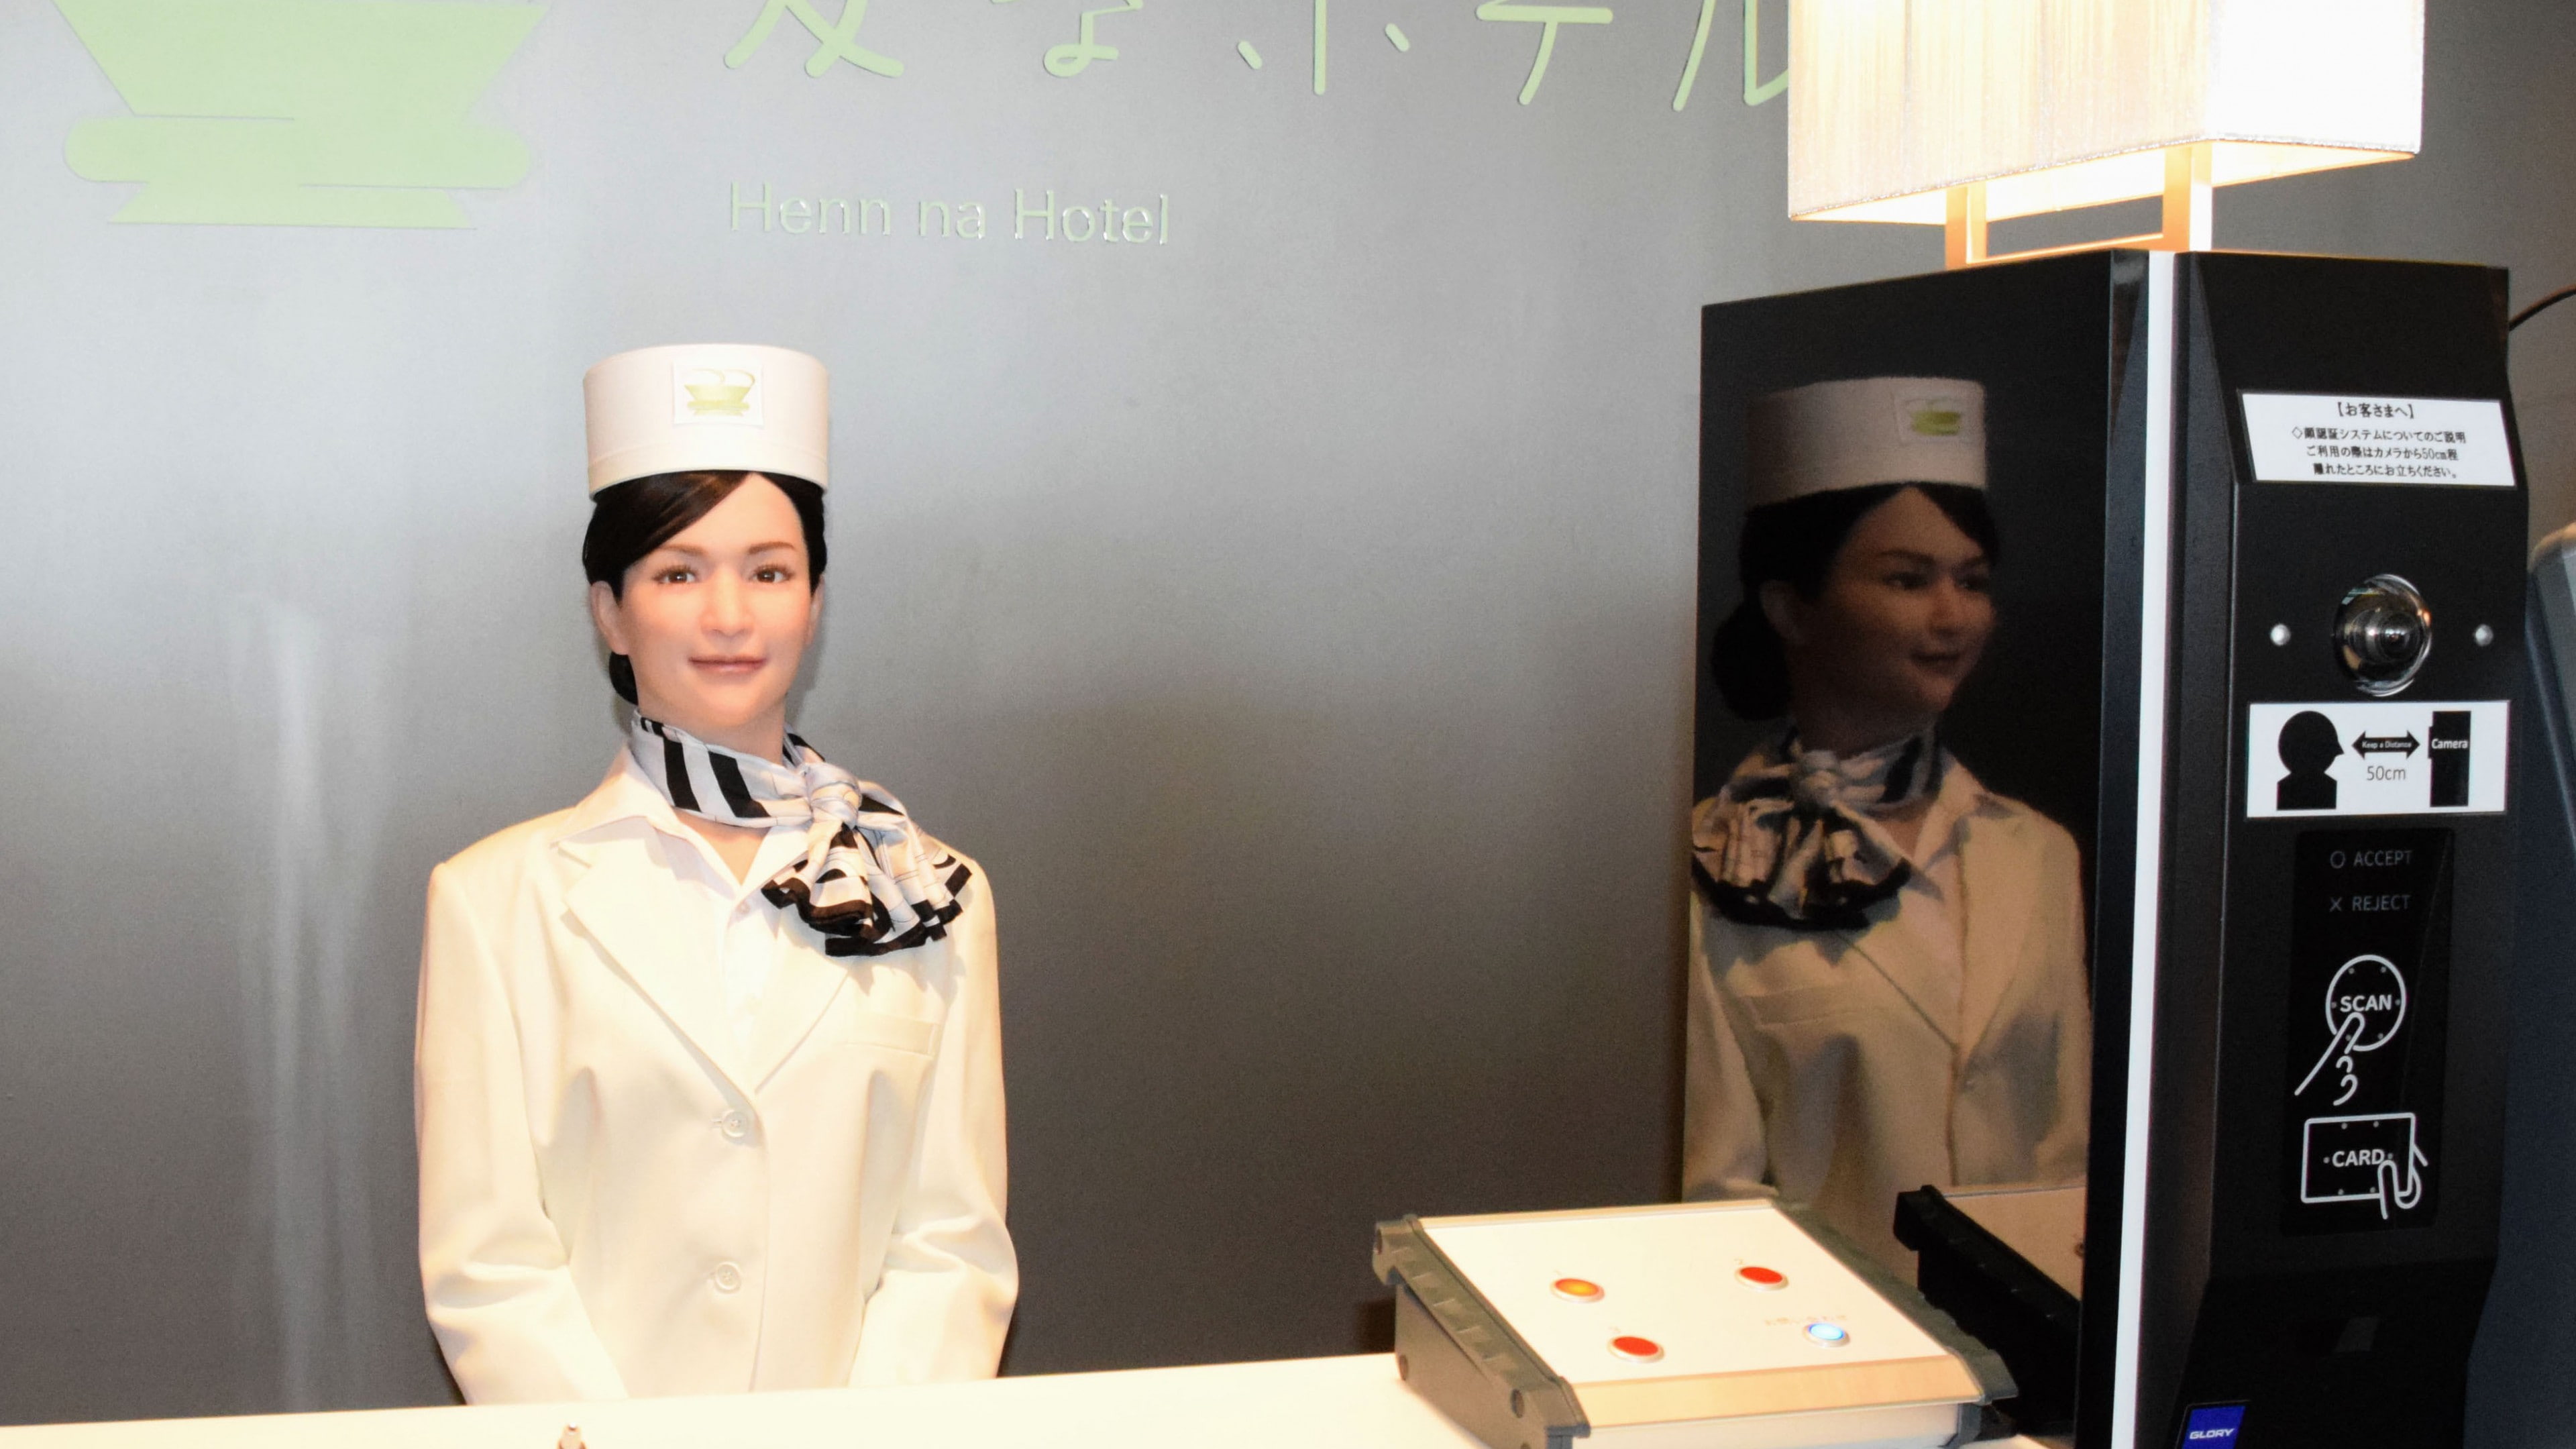 woman in white desk officer uniform standing, Female Robot Receptionist